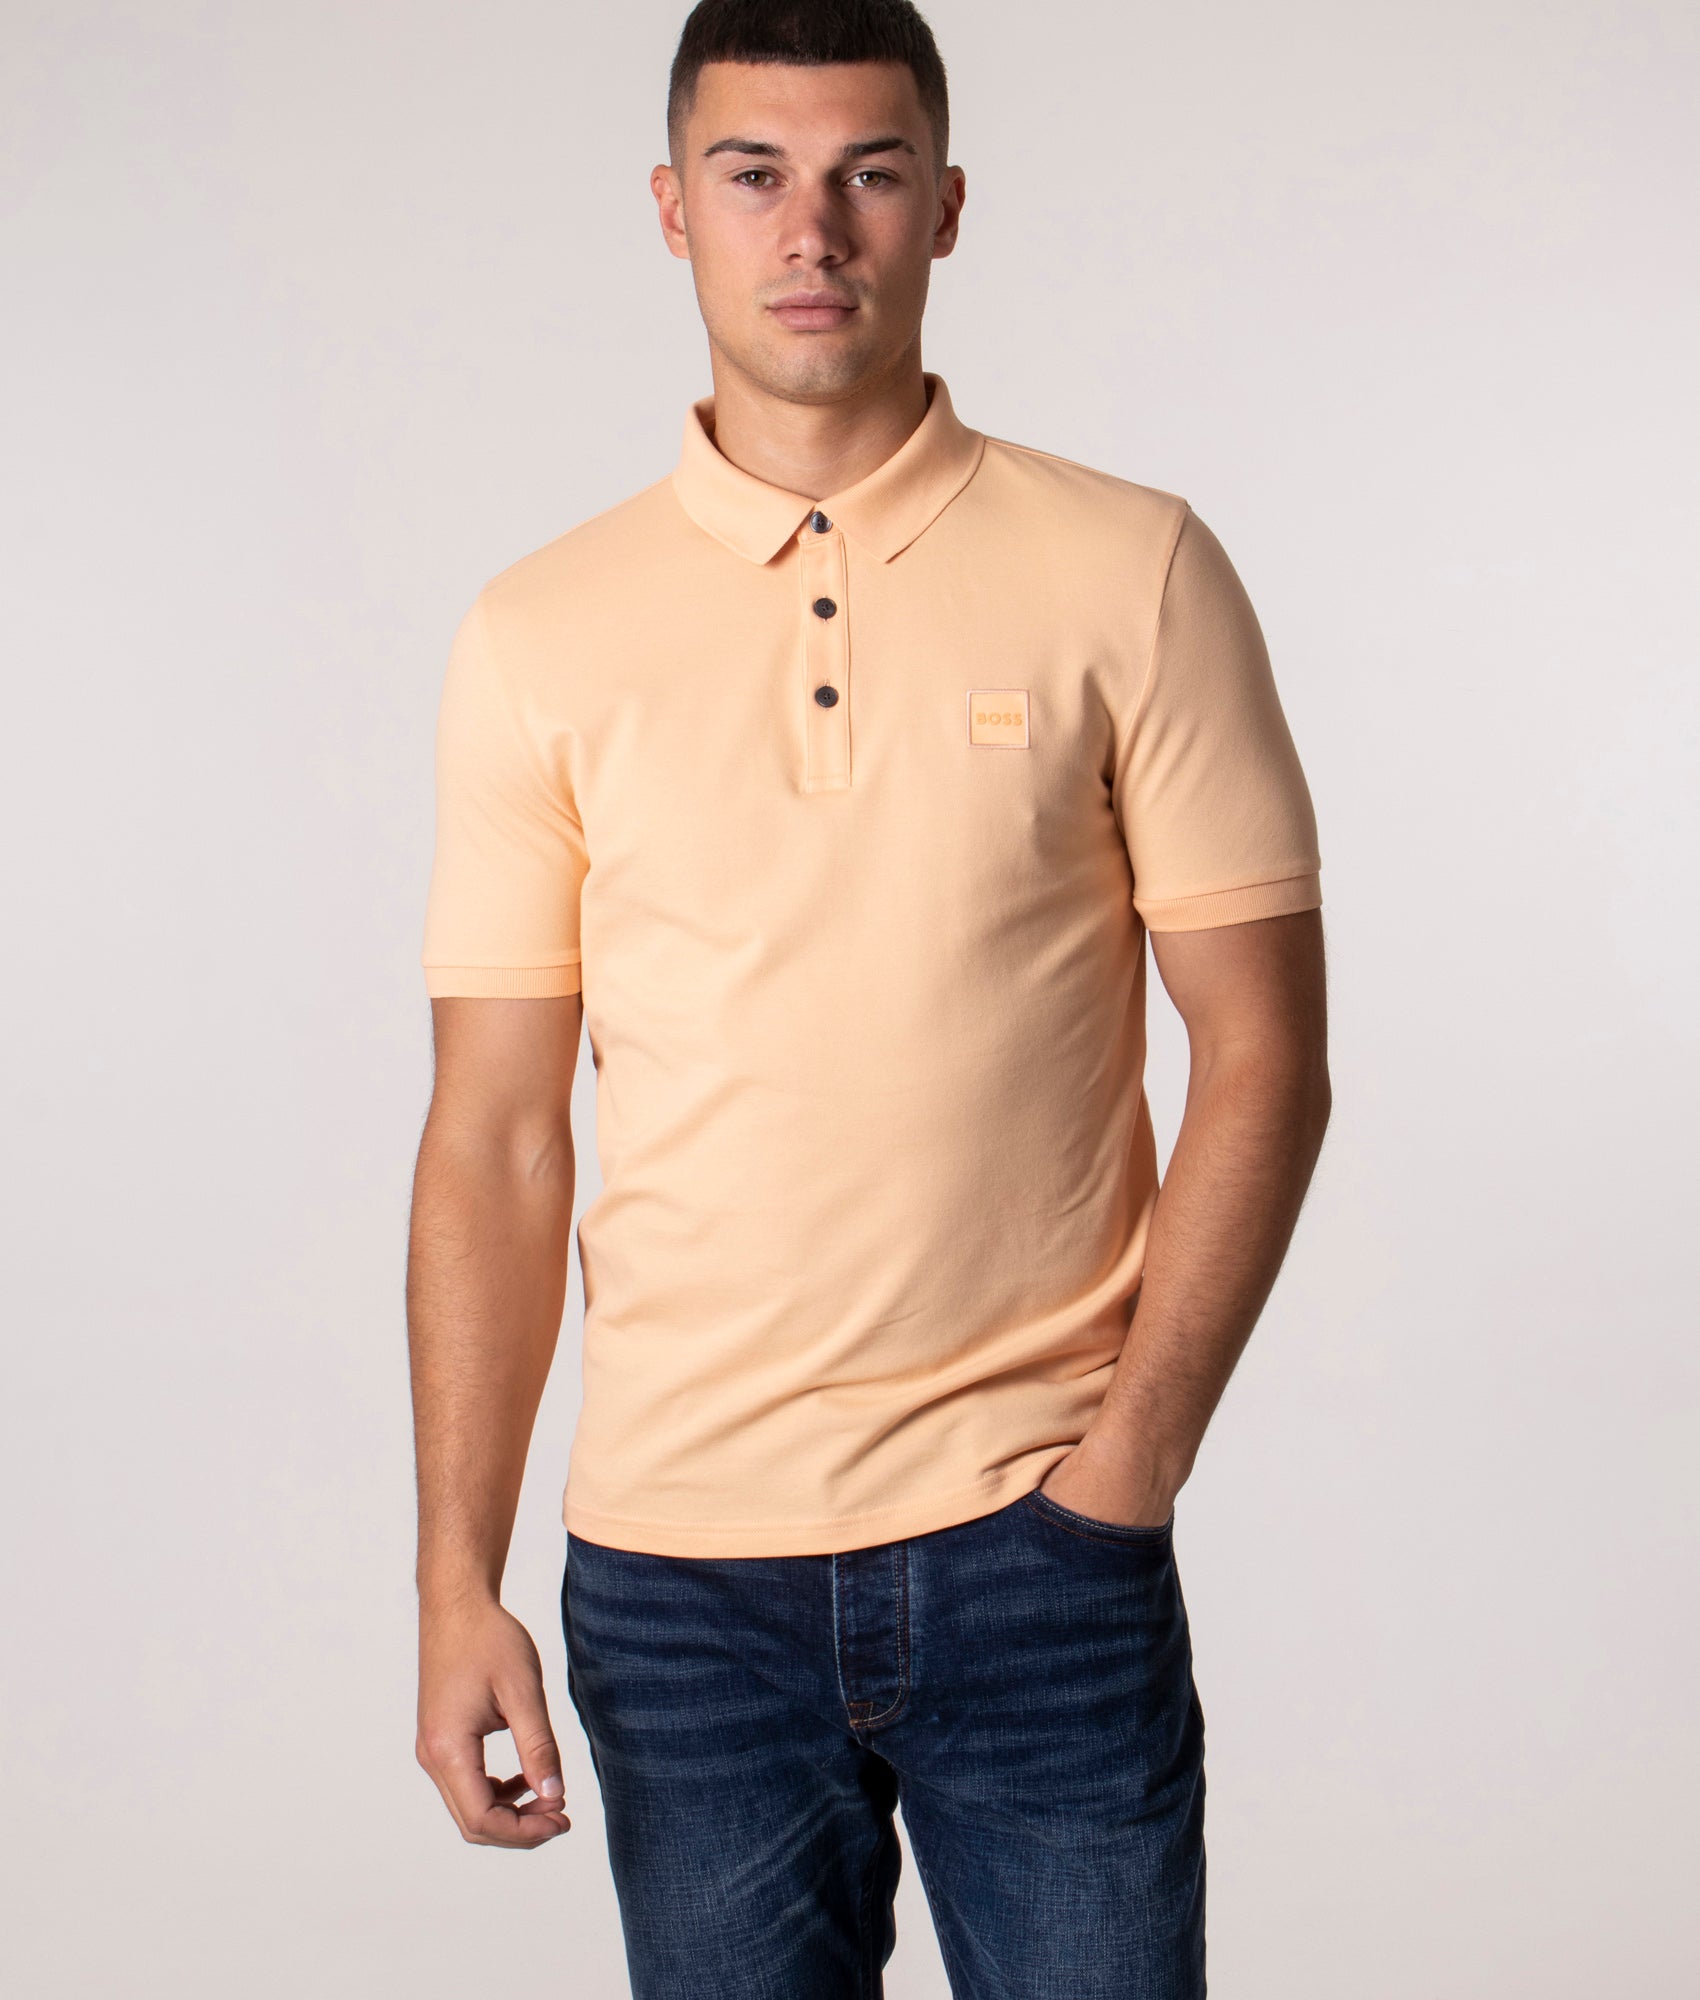 EQVVS Slim | Fit Passenger | Orange Polo Shirt BOSS Pastel